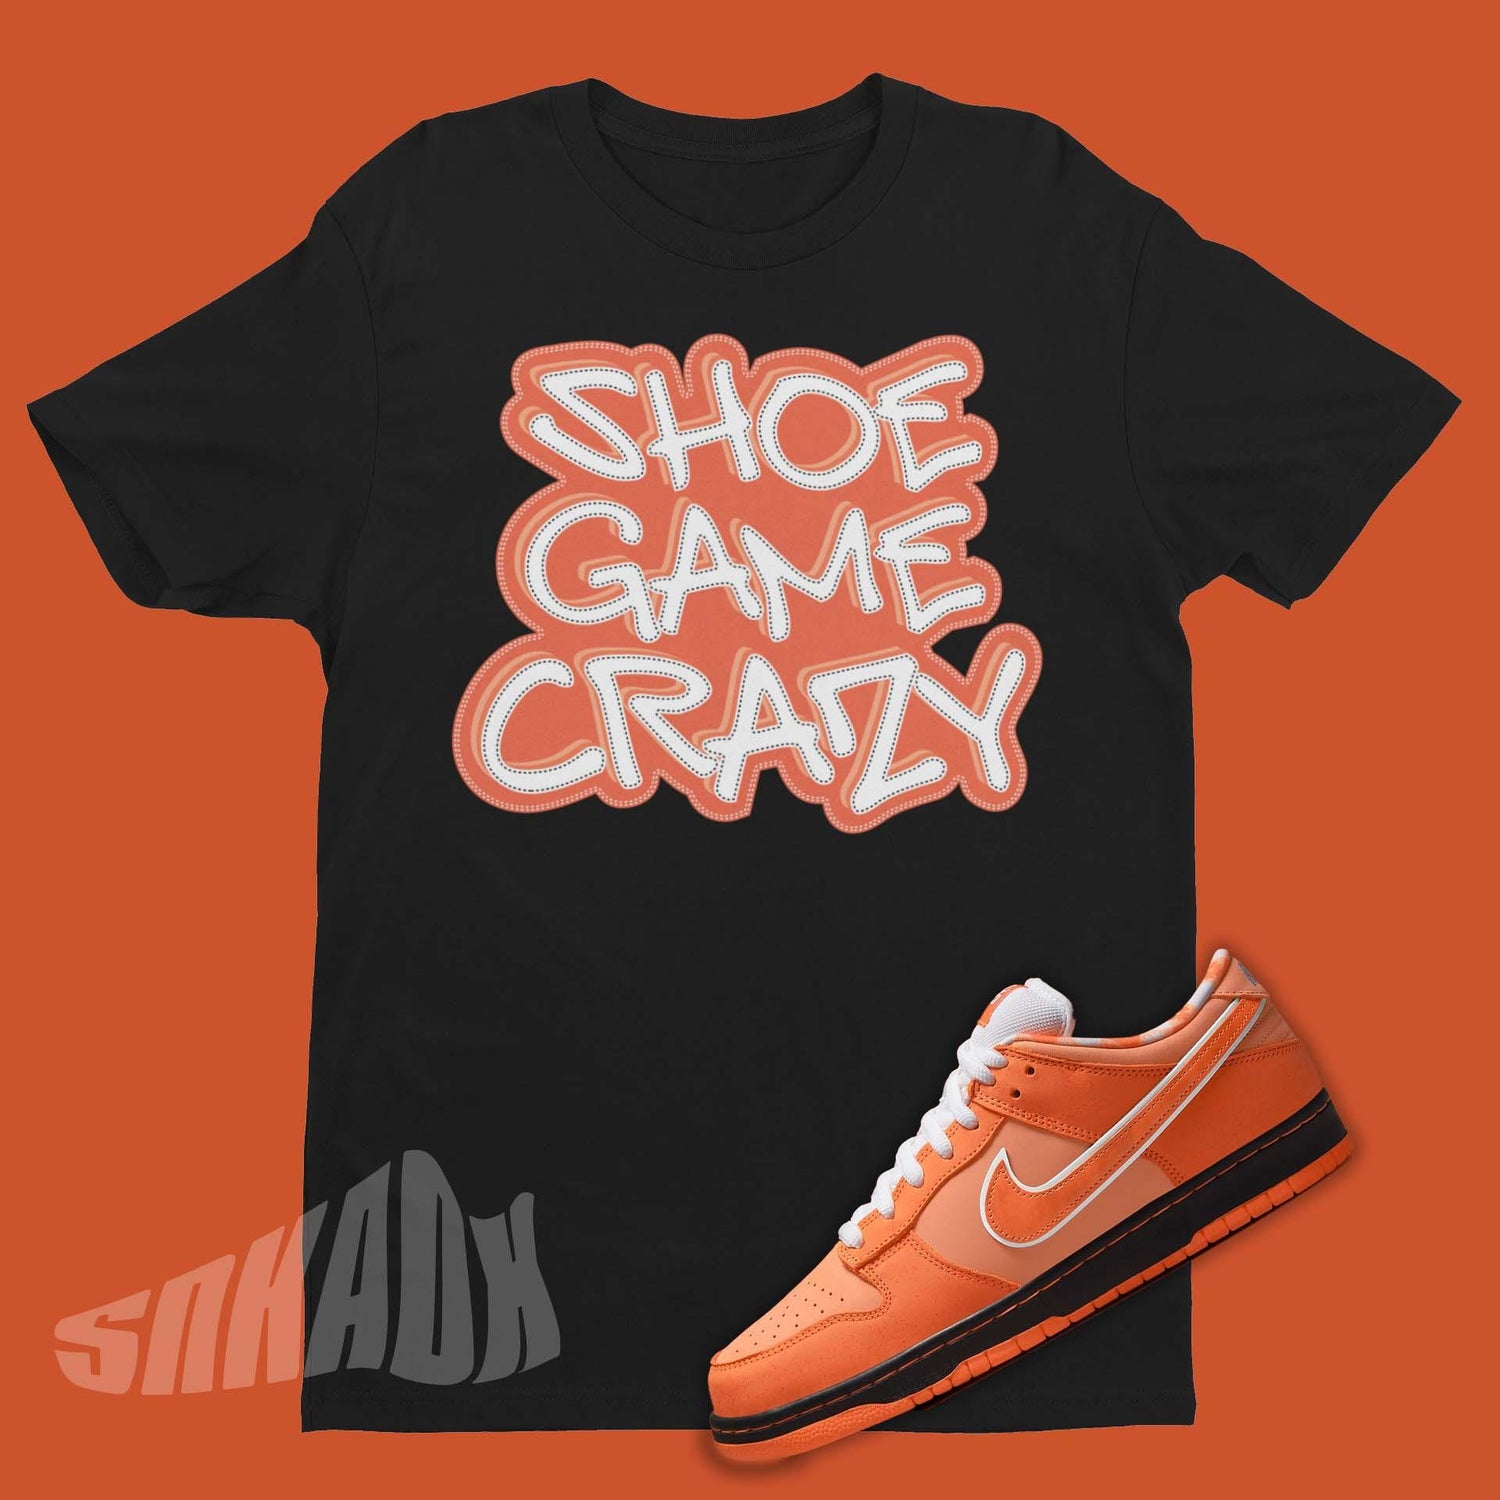 Shoe Game Crazy Shirt To Match Concepts Dunks Orange Lobster